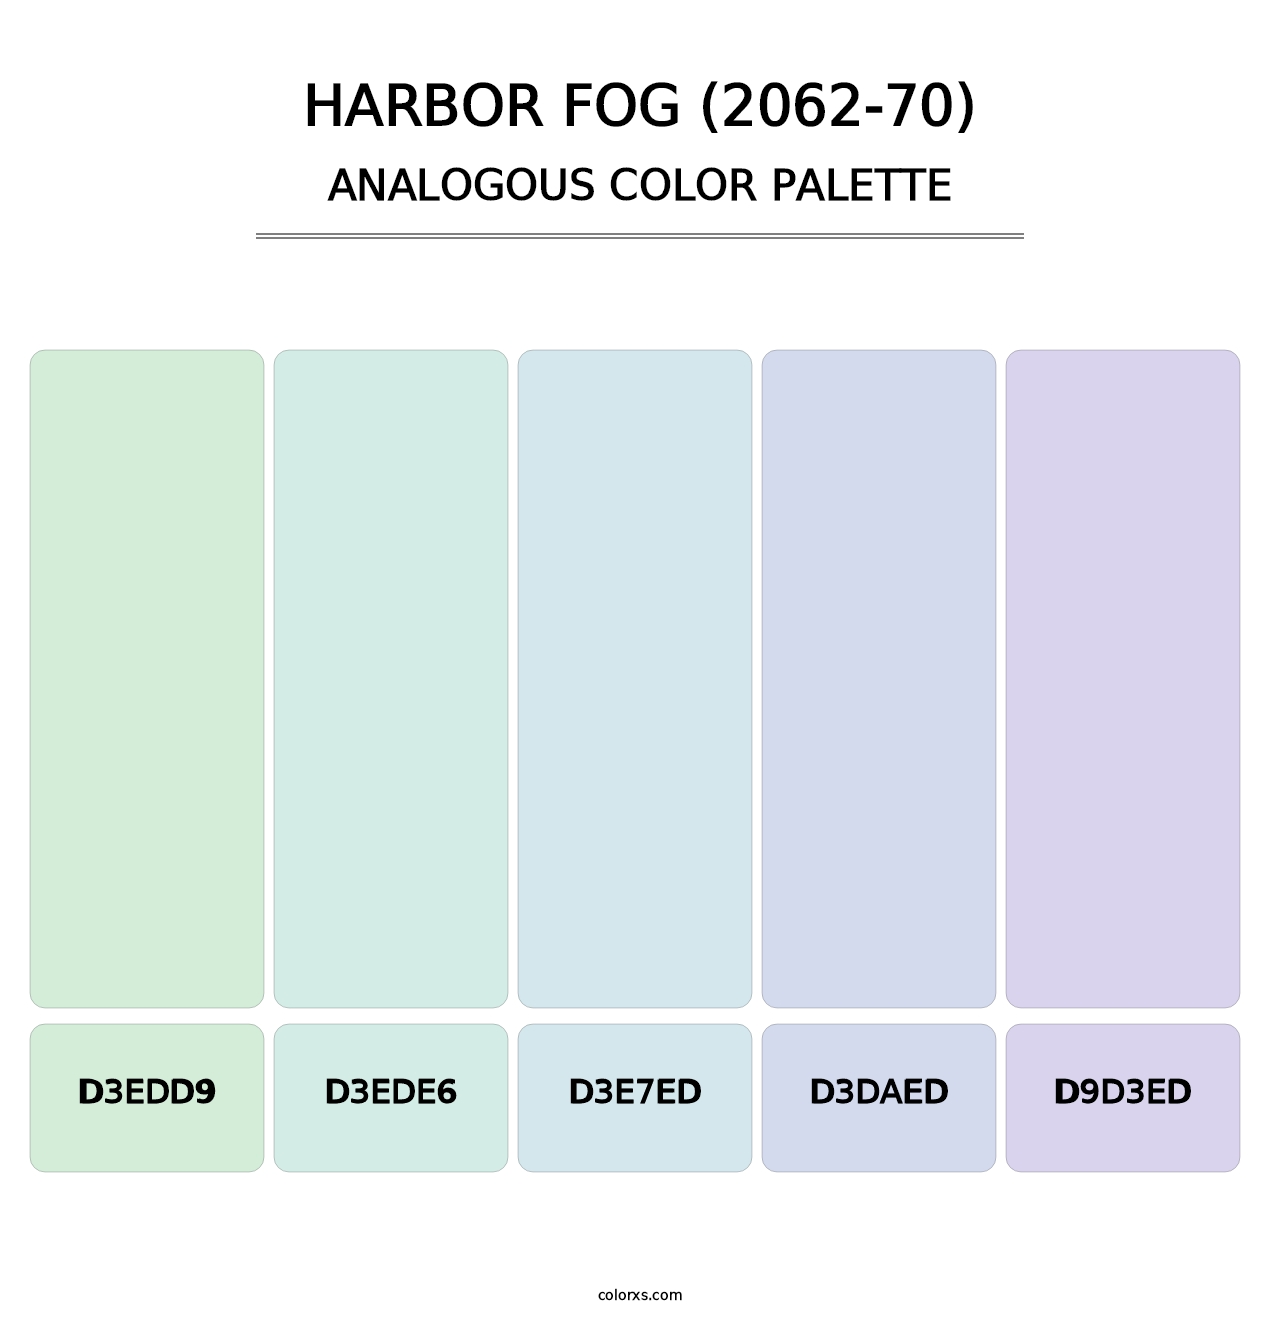 Harbor Fog (2062-70) - Analogous Color Palette